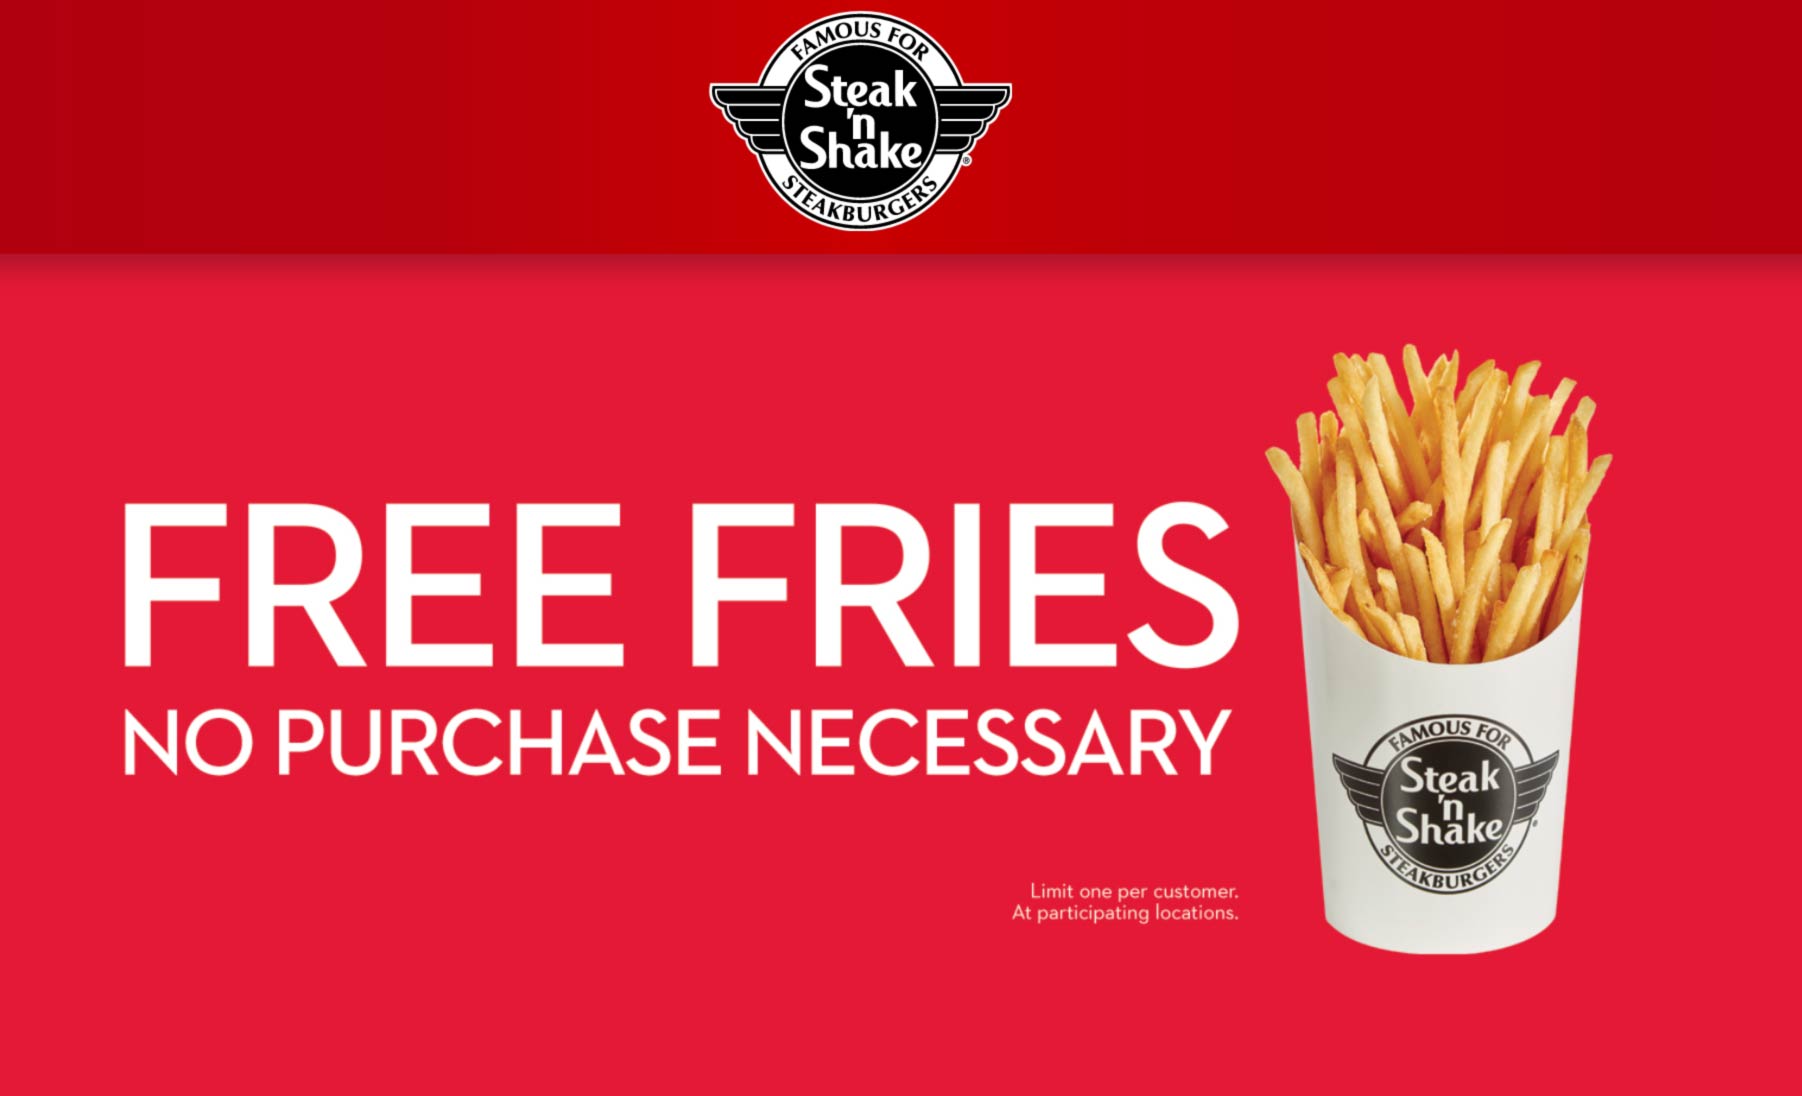 Free fries at Steak n Shake restaurants, no purchase necessary 